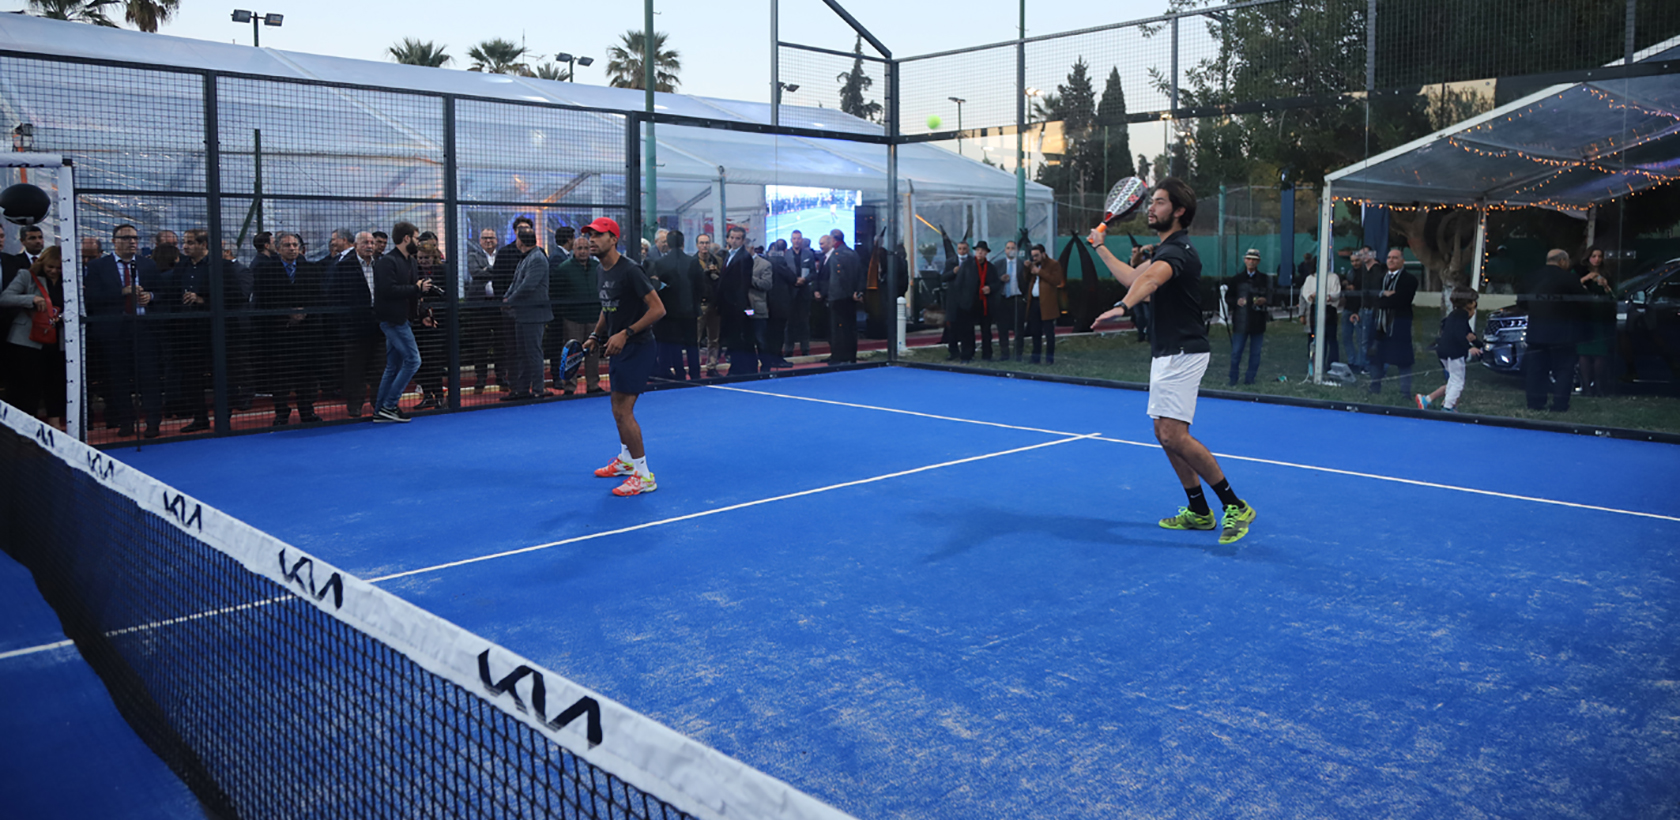  Nouveau : Un « Padel by KIA » au Tennis Club de Tunis